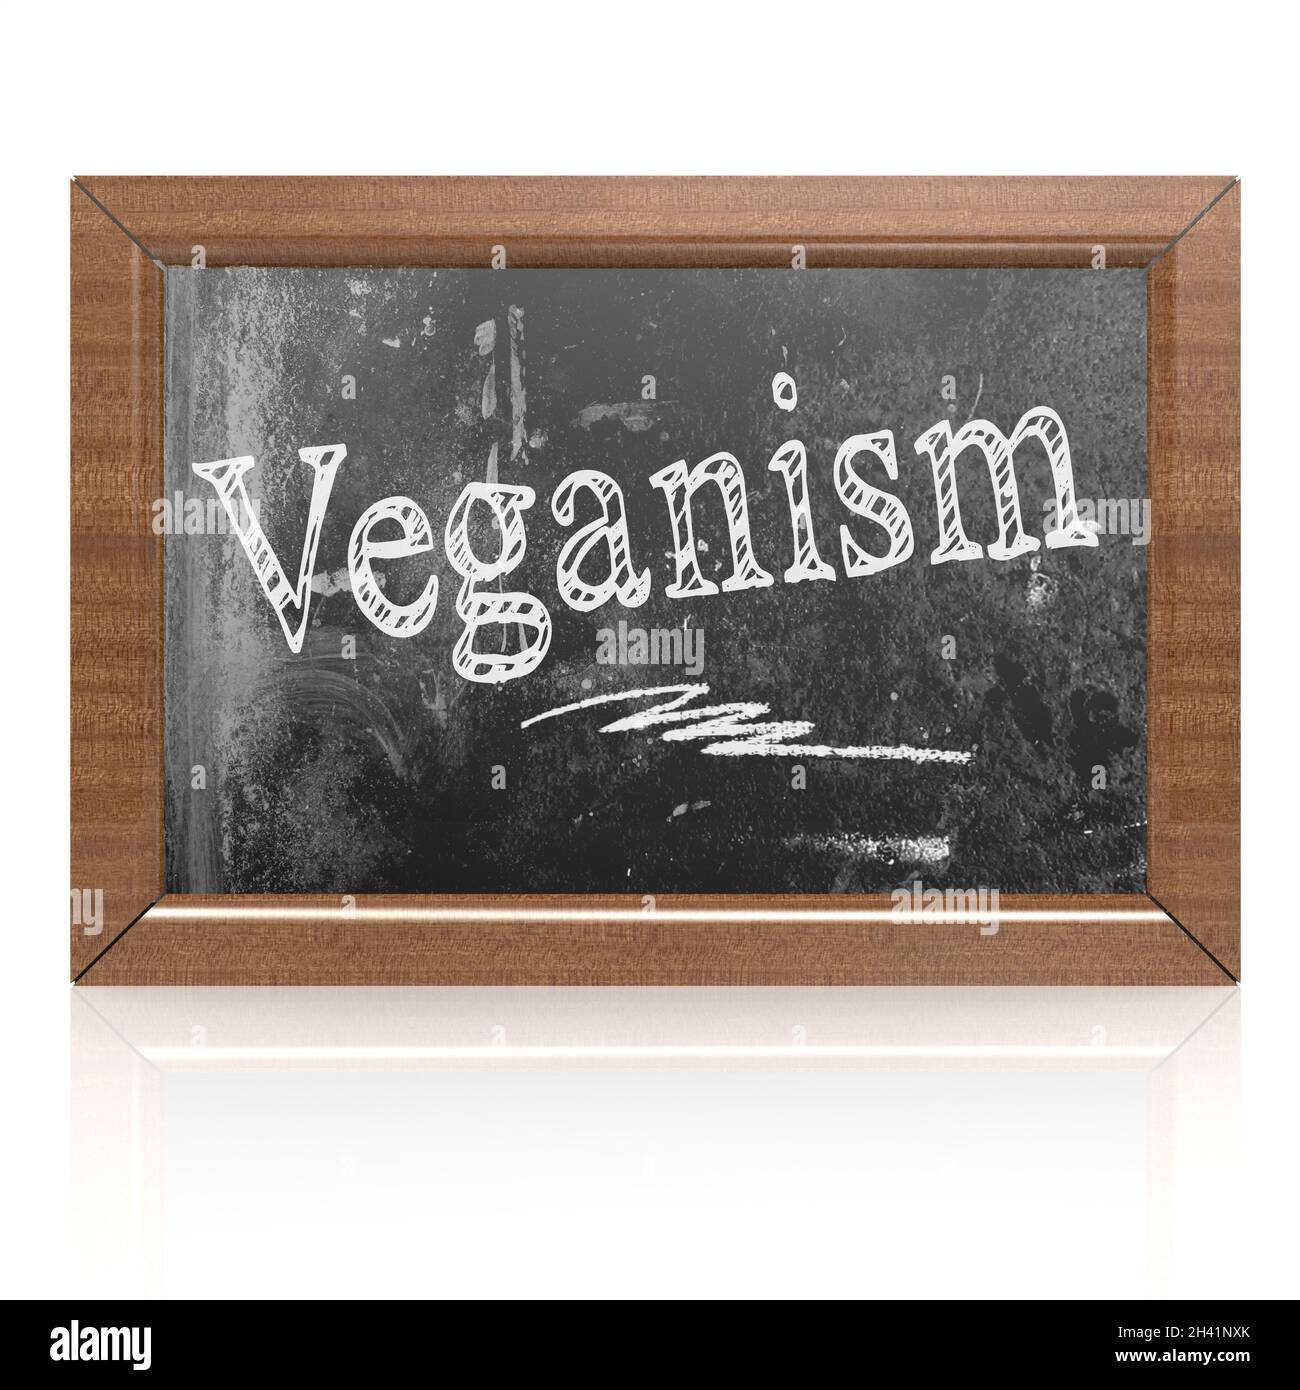 Veganism text written on blackboard Stock Photo